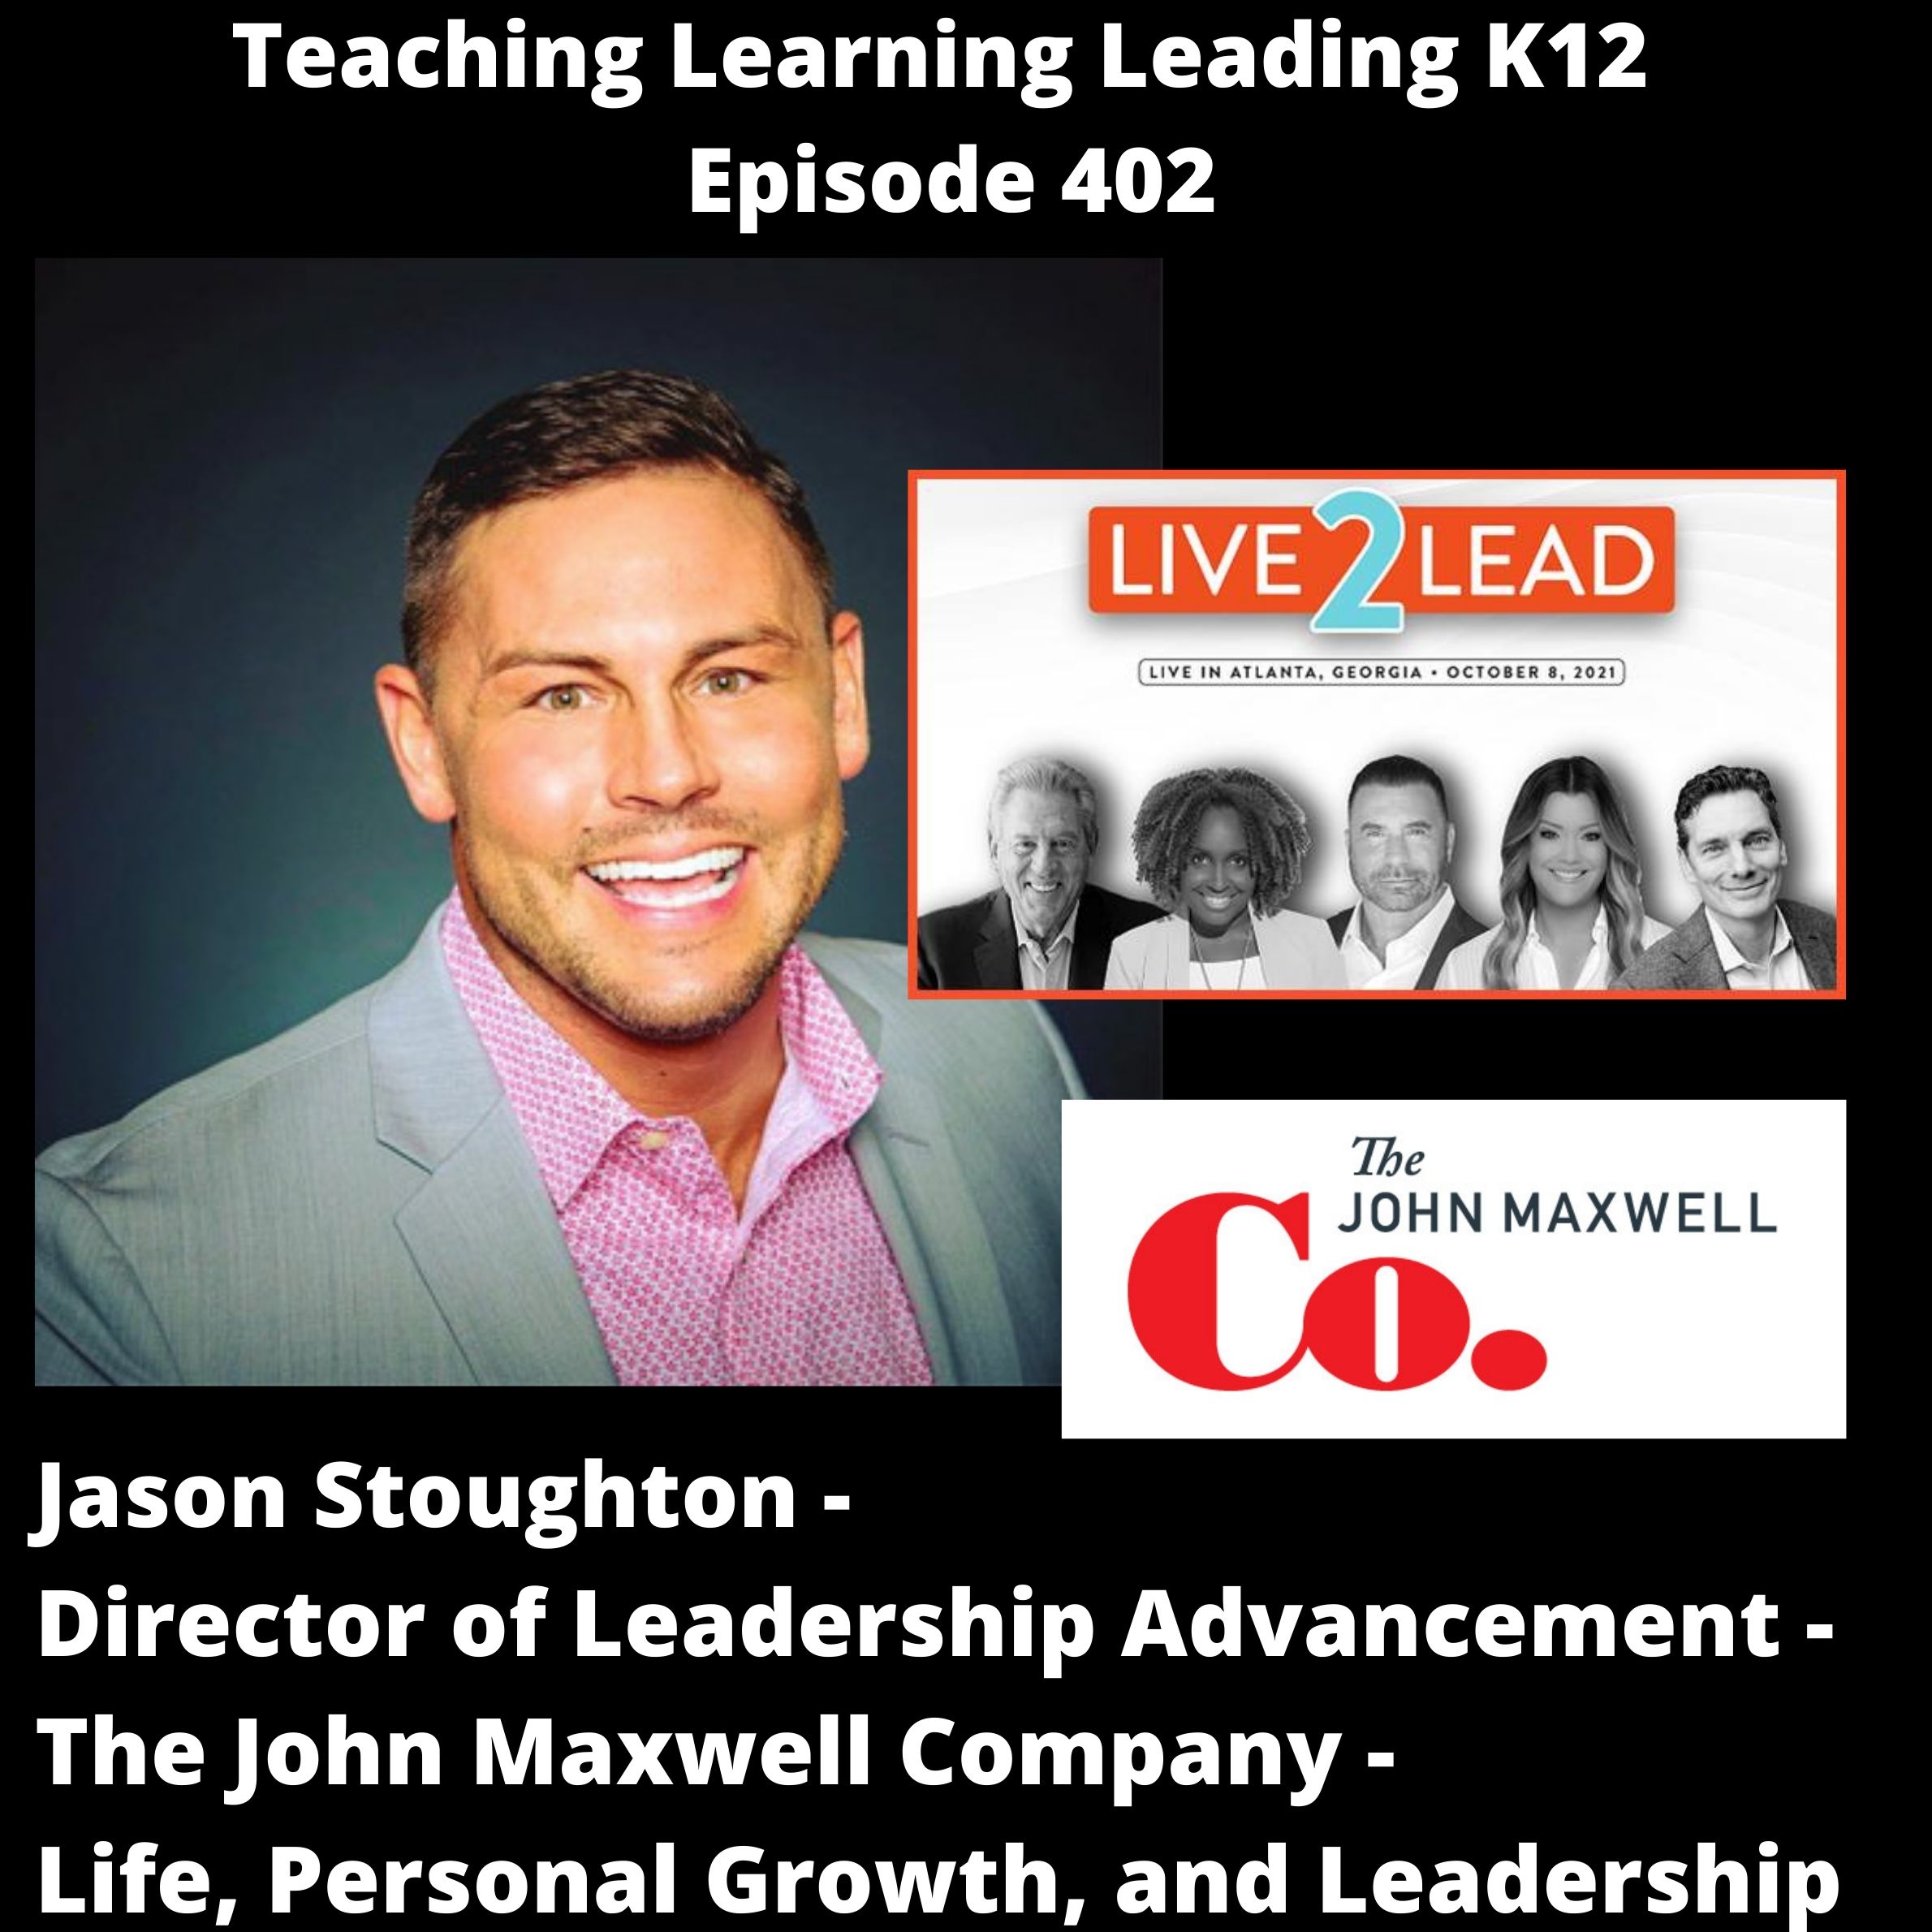 Jason Stoughton - Director of Leadership Advancement - The John Maxwell Company - 402 Image